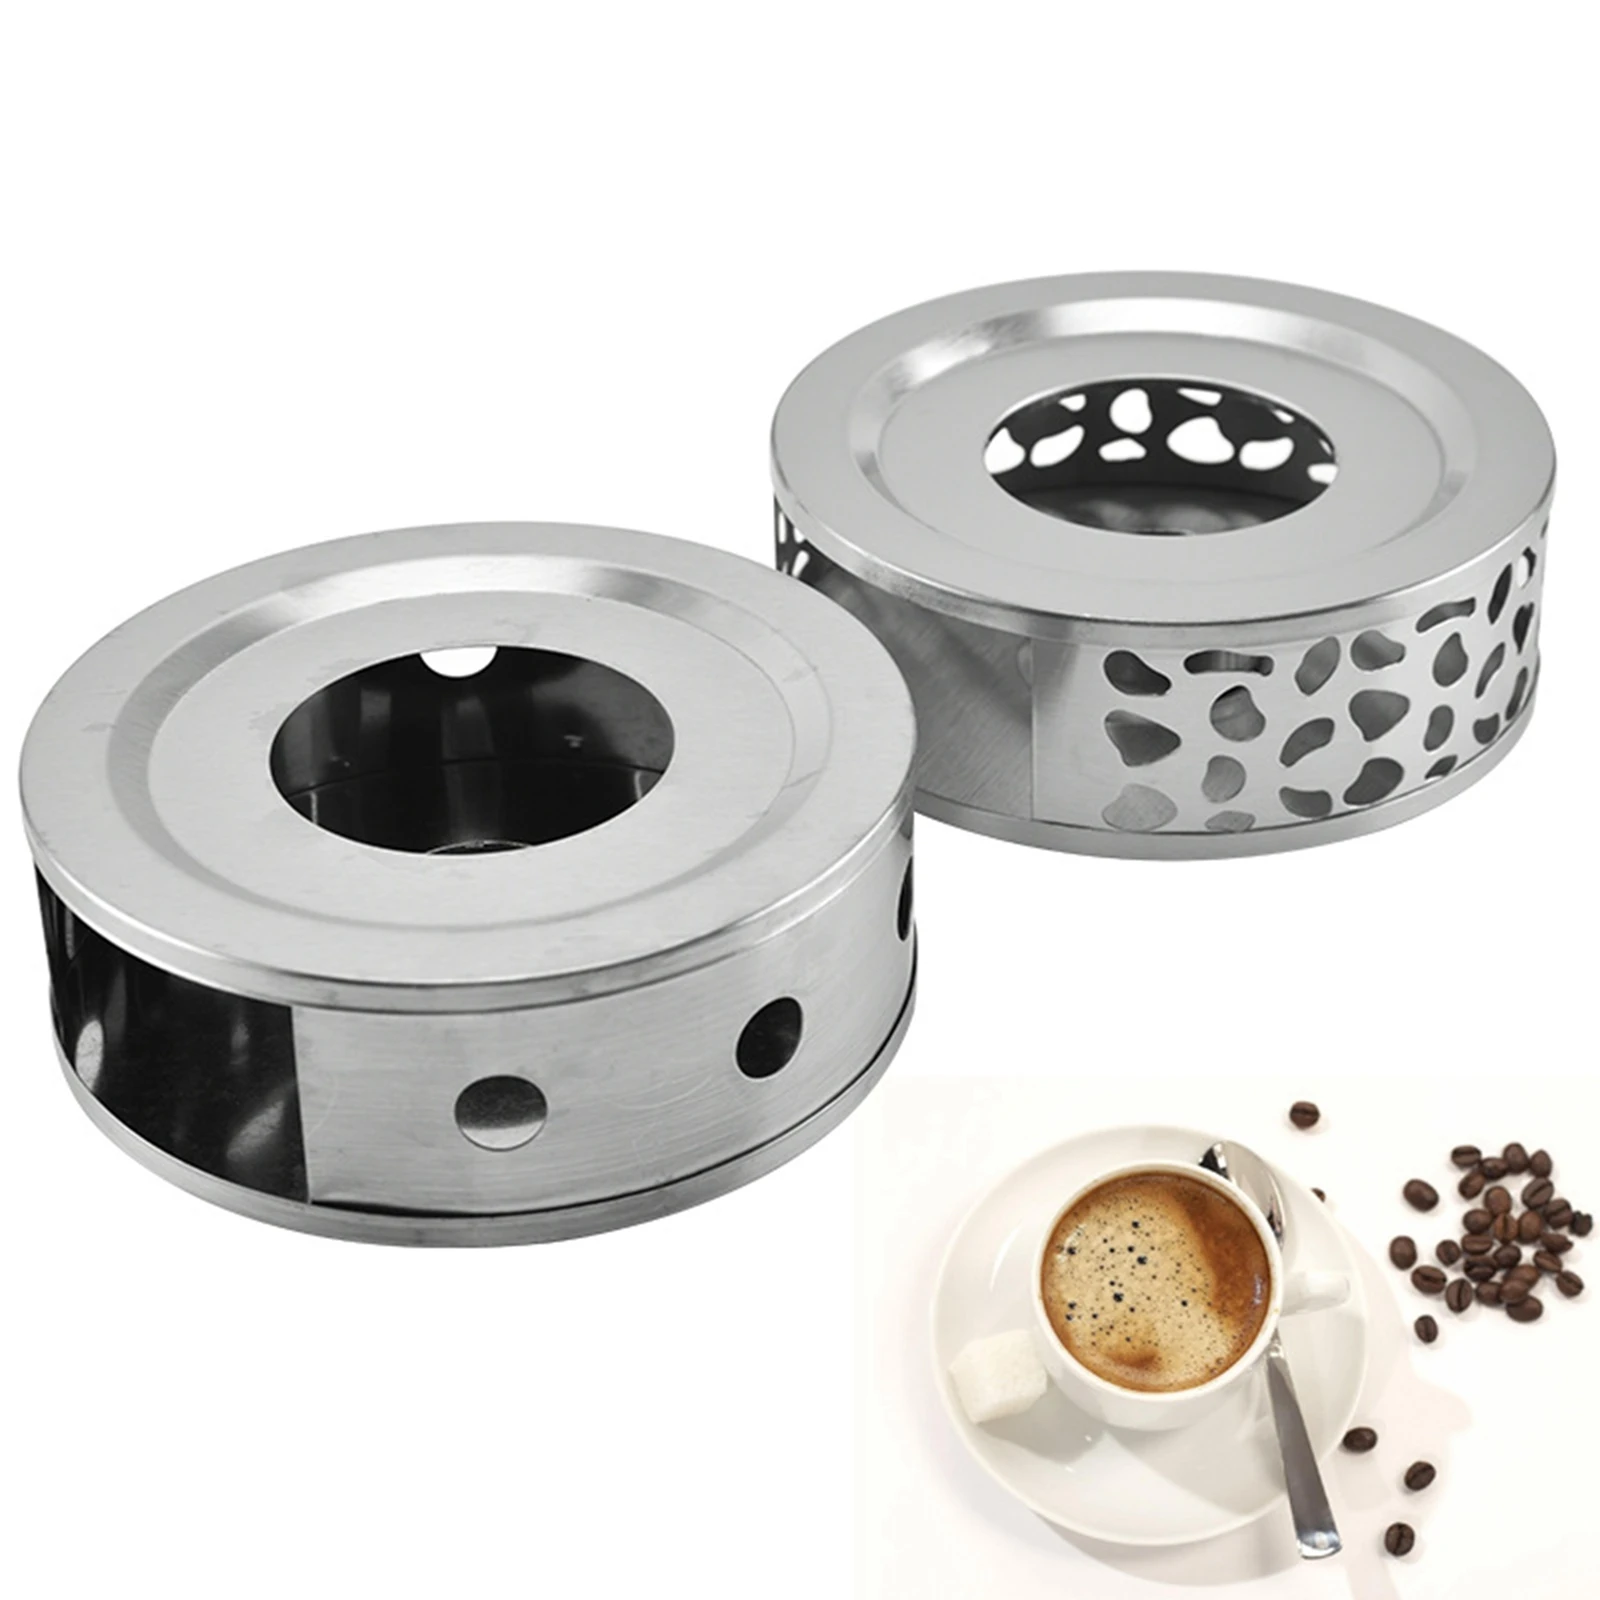 Portable Warmer Tea Holder Durable Stainless Steel Candle Warmer Tea Light Holder Trivets Coffee Warmer Teapot Heating Base